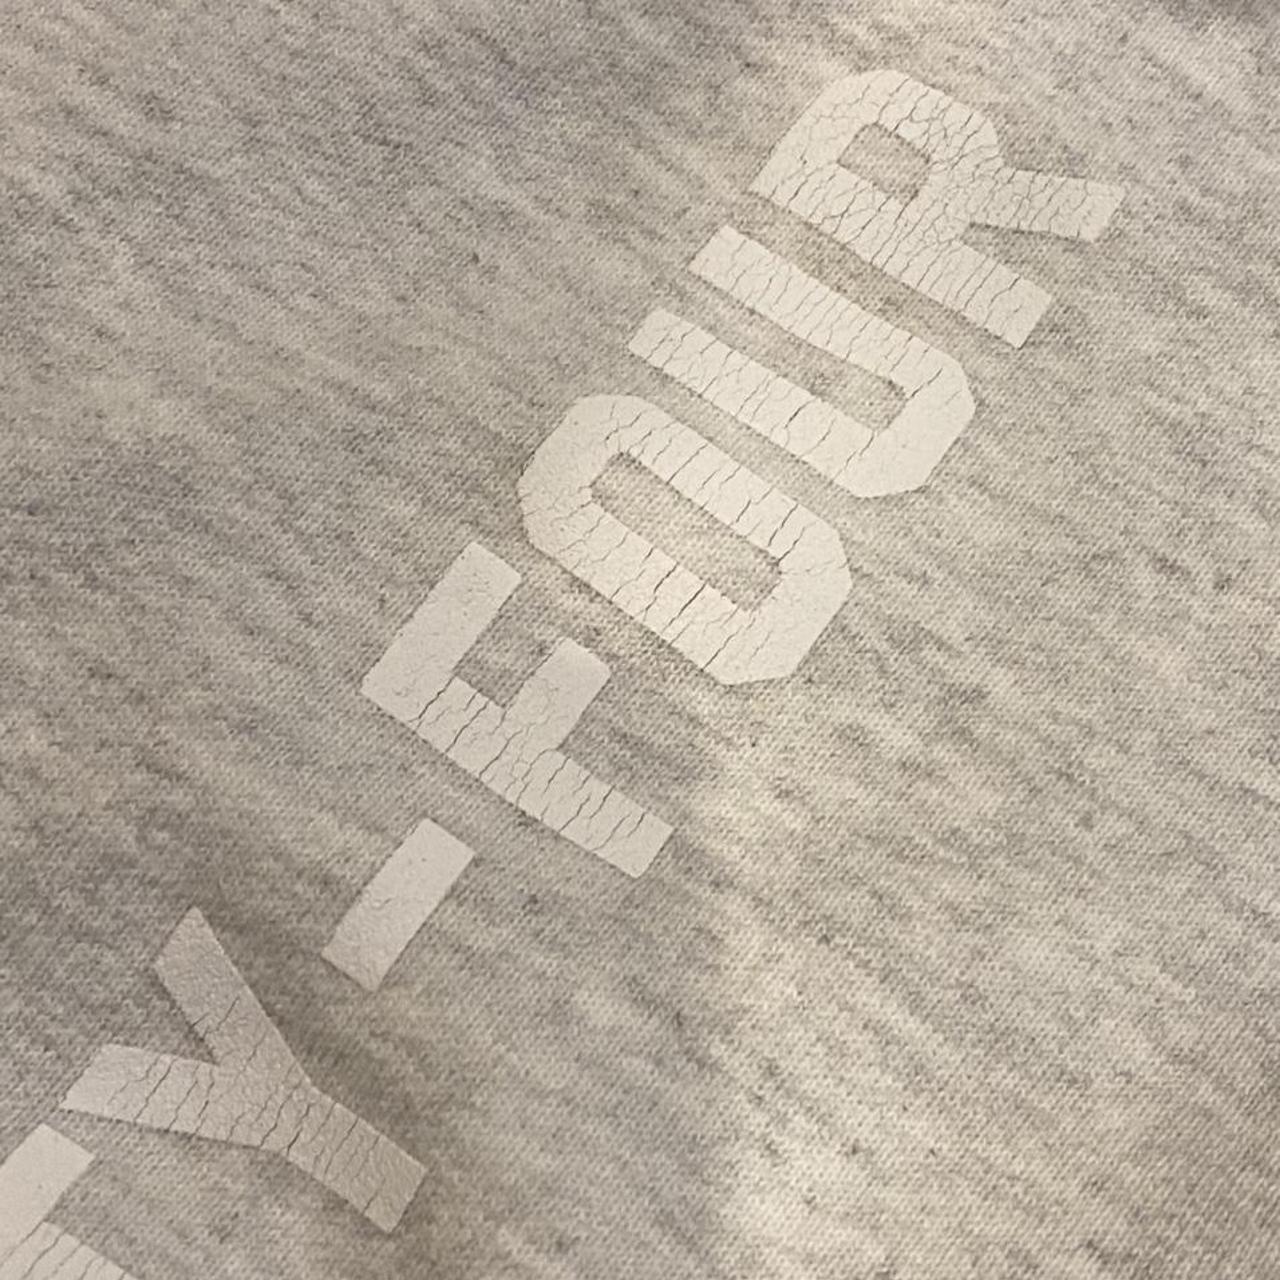 Product Image 2 - A24 Champion sweatshirt

Hasn’t been worn